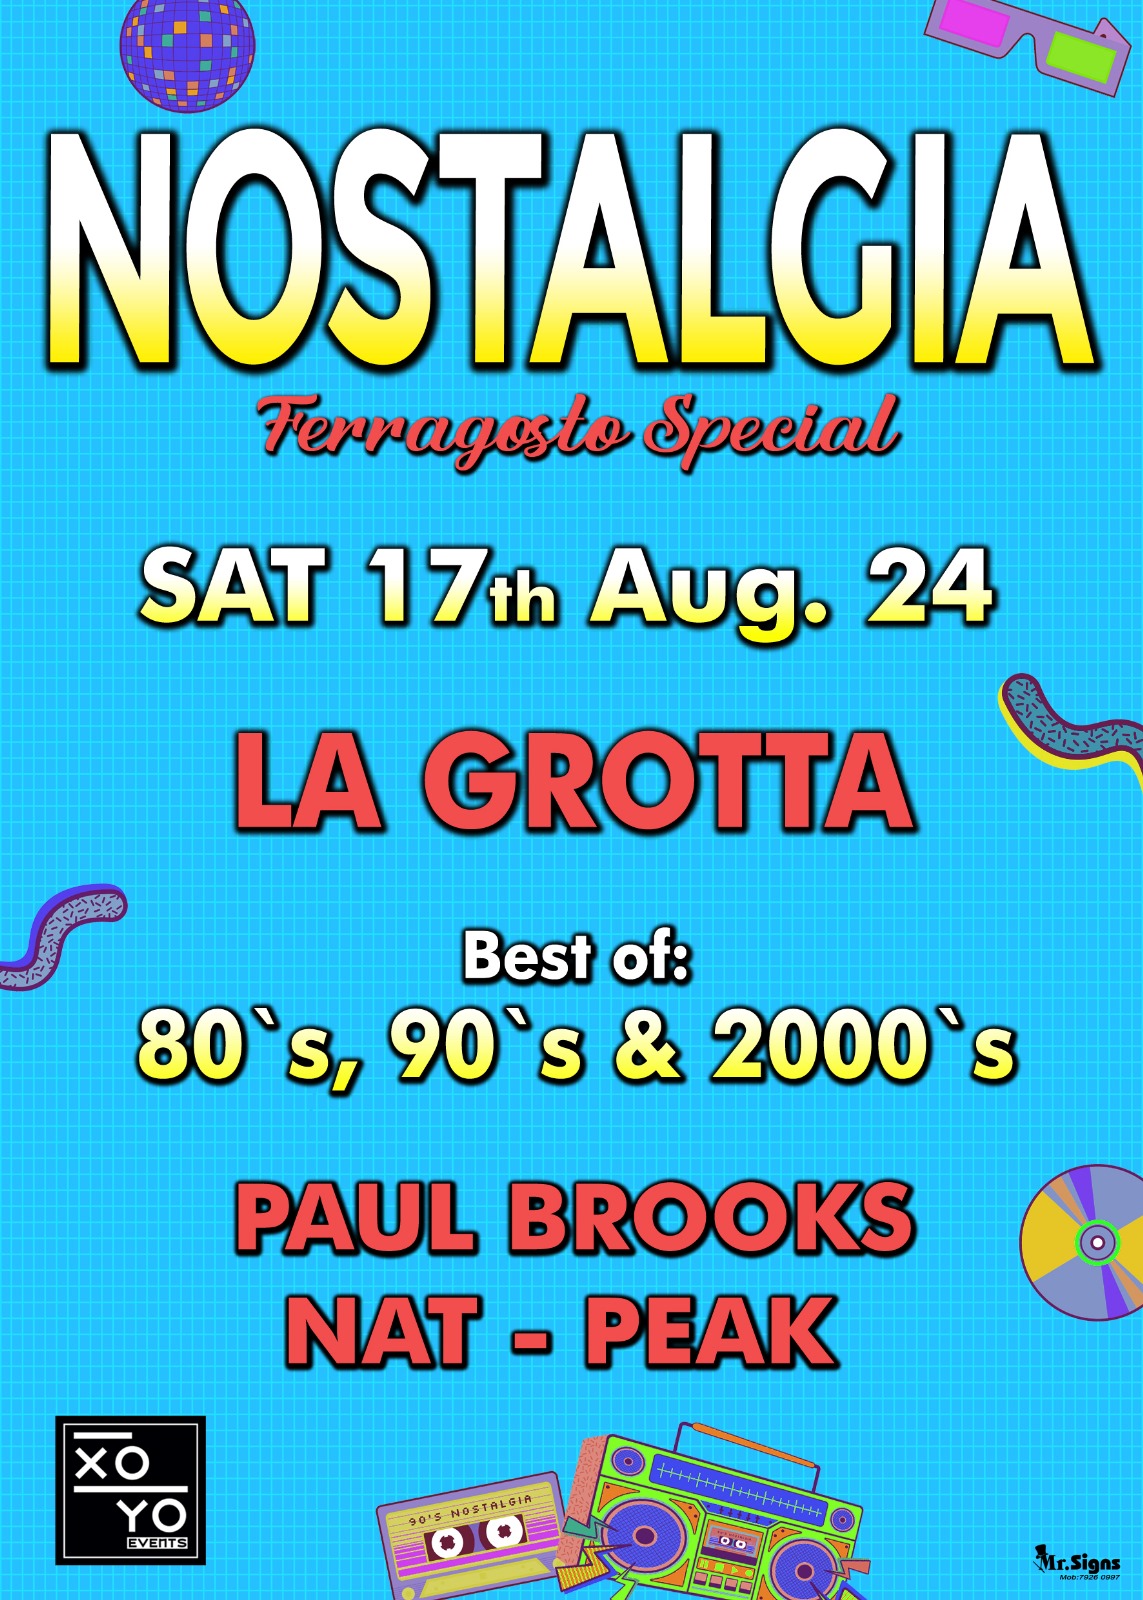 NOSTALGIA Ferragosto Special / La Grotta / Sat 17th Aug 24